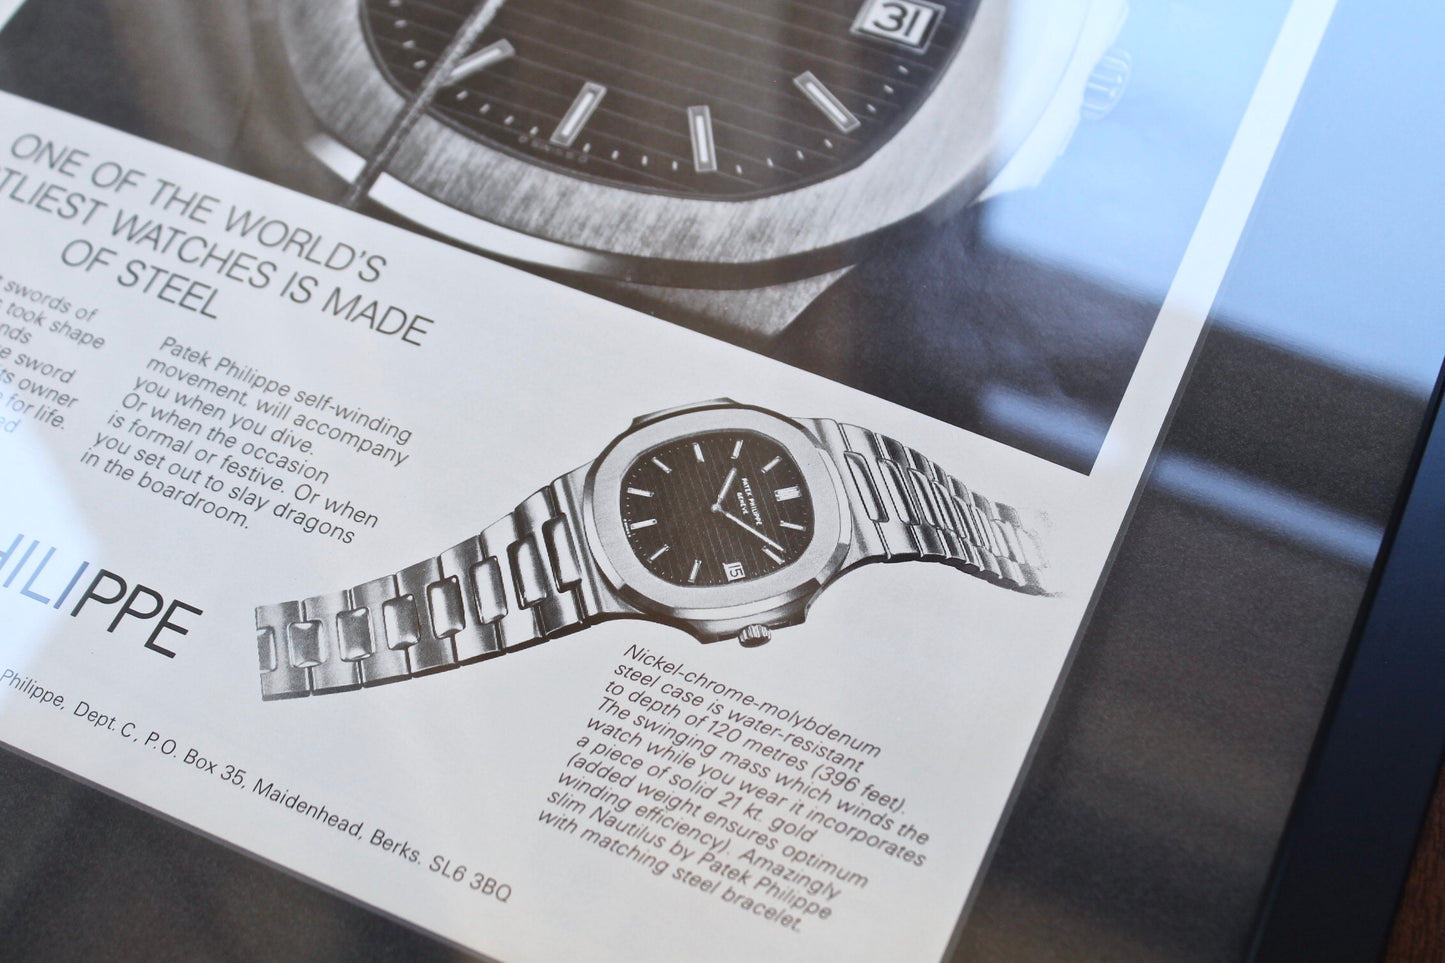 Patek Philippe Nautilus 3700 ' Costliest Watches is Made Of Steel'